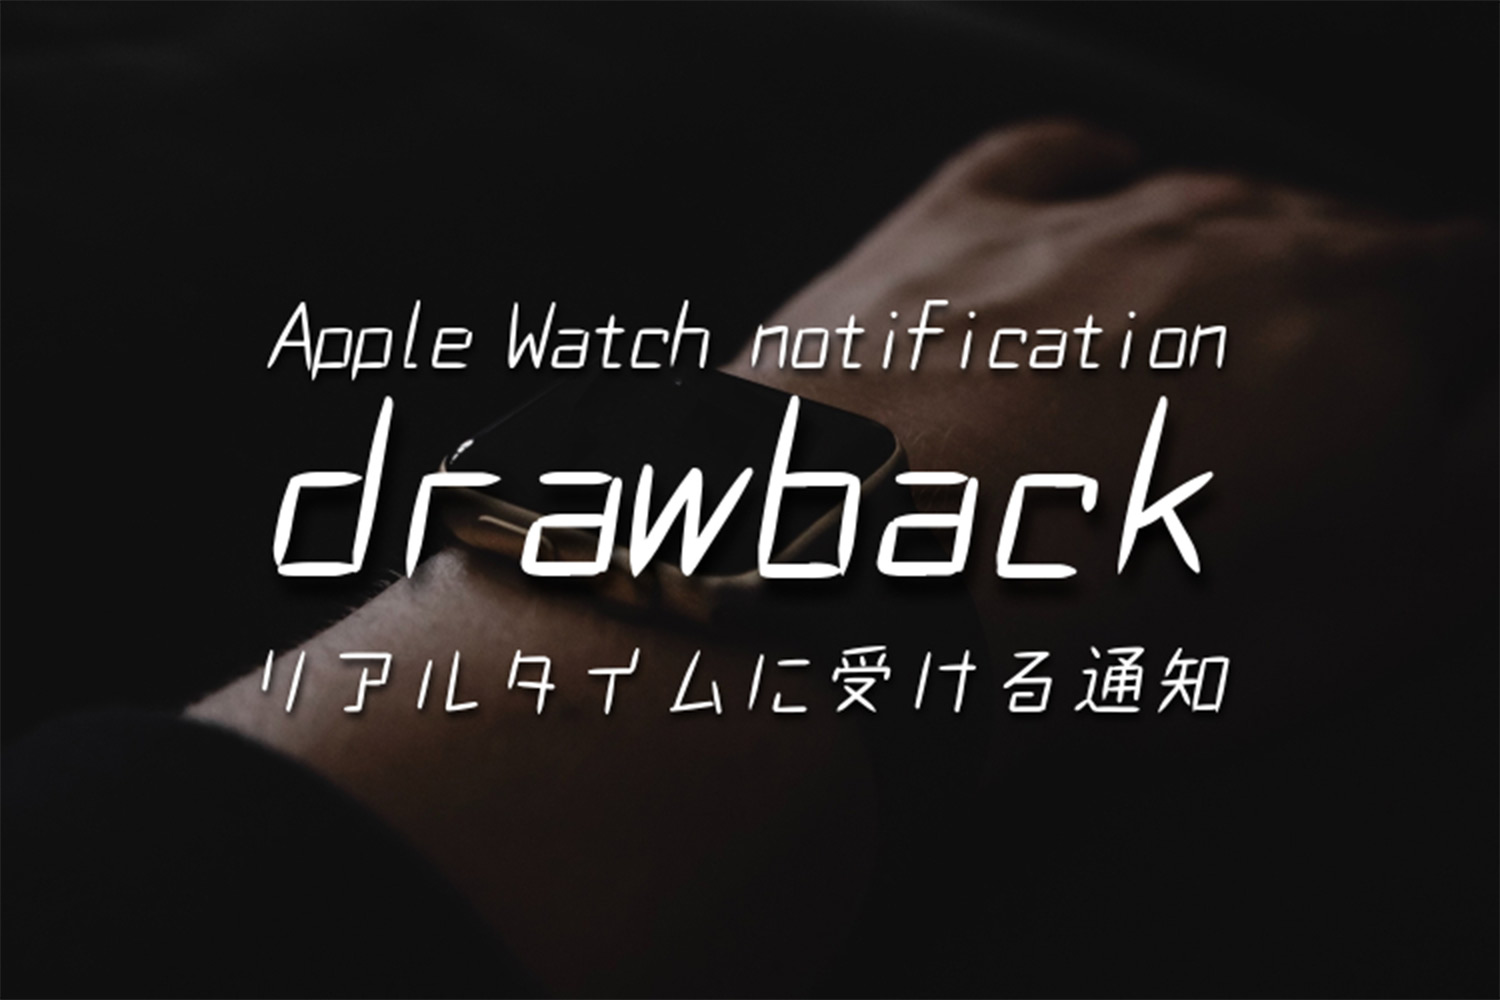 Apple Watch drawback thumbnail